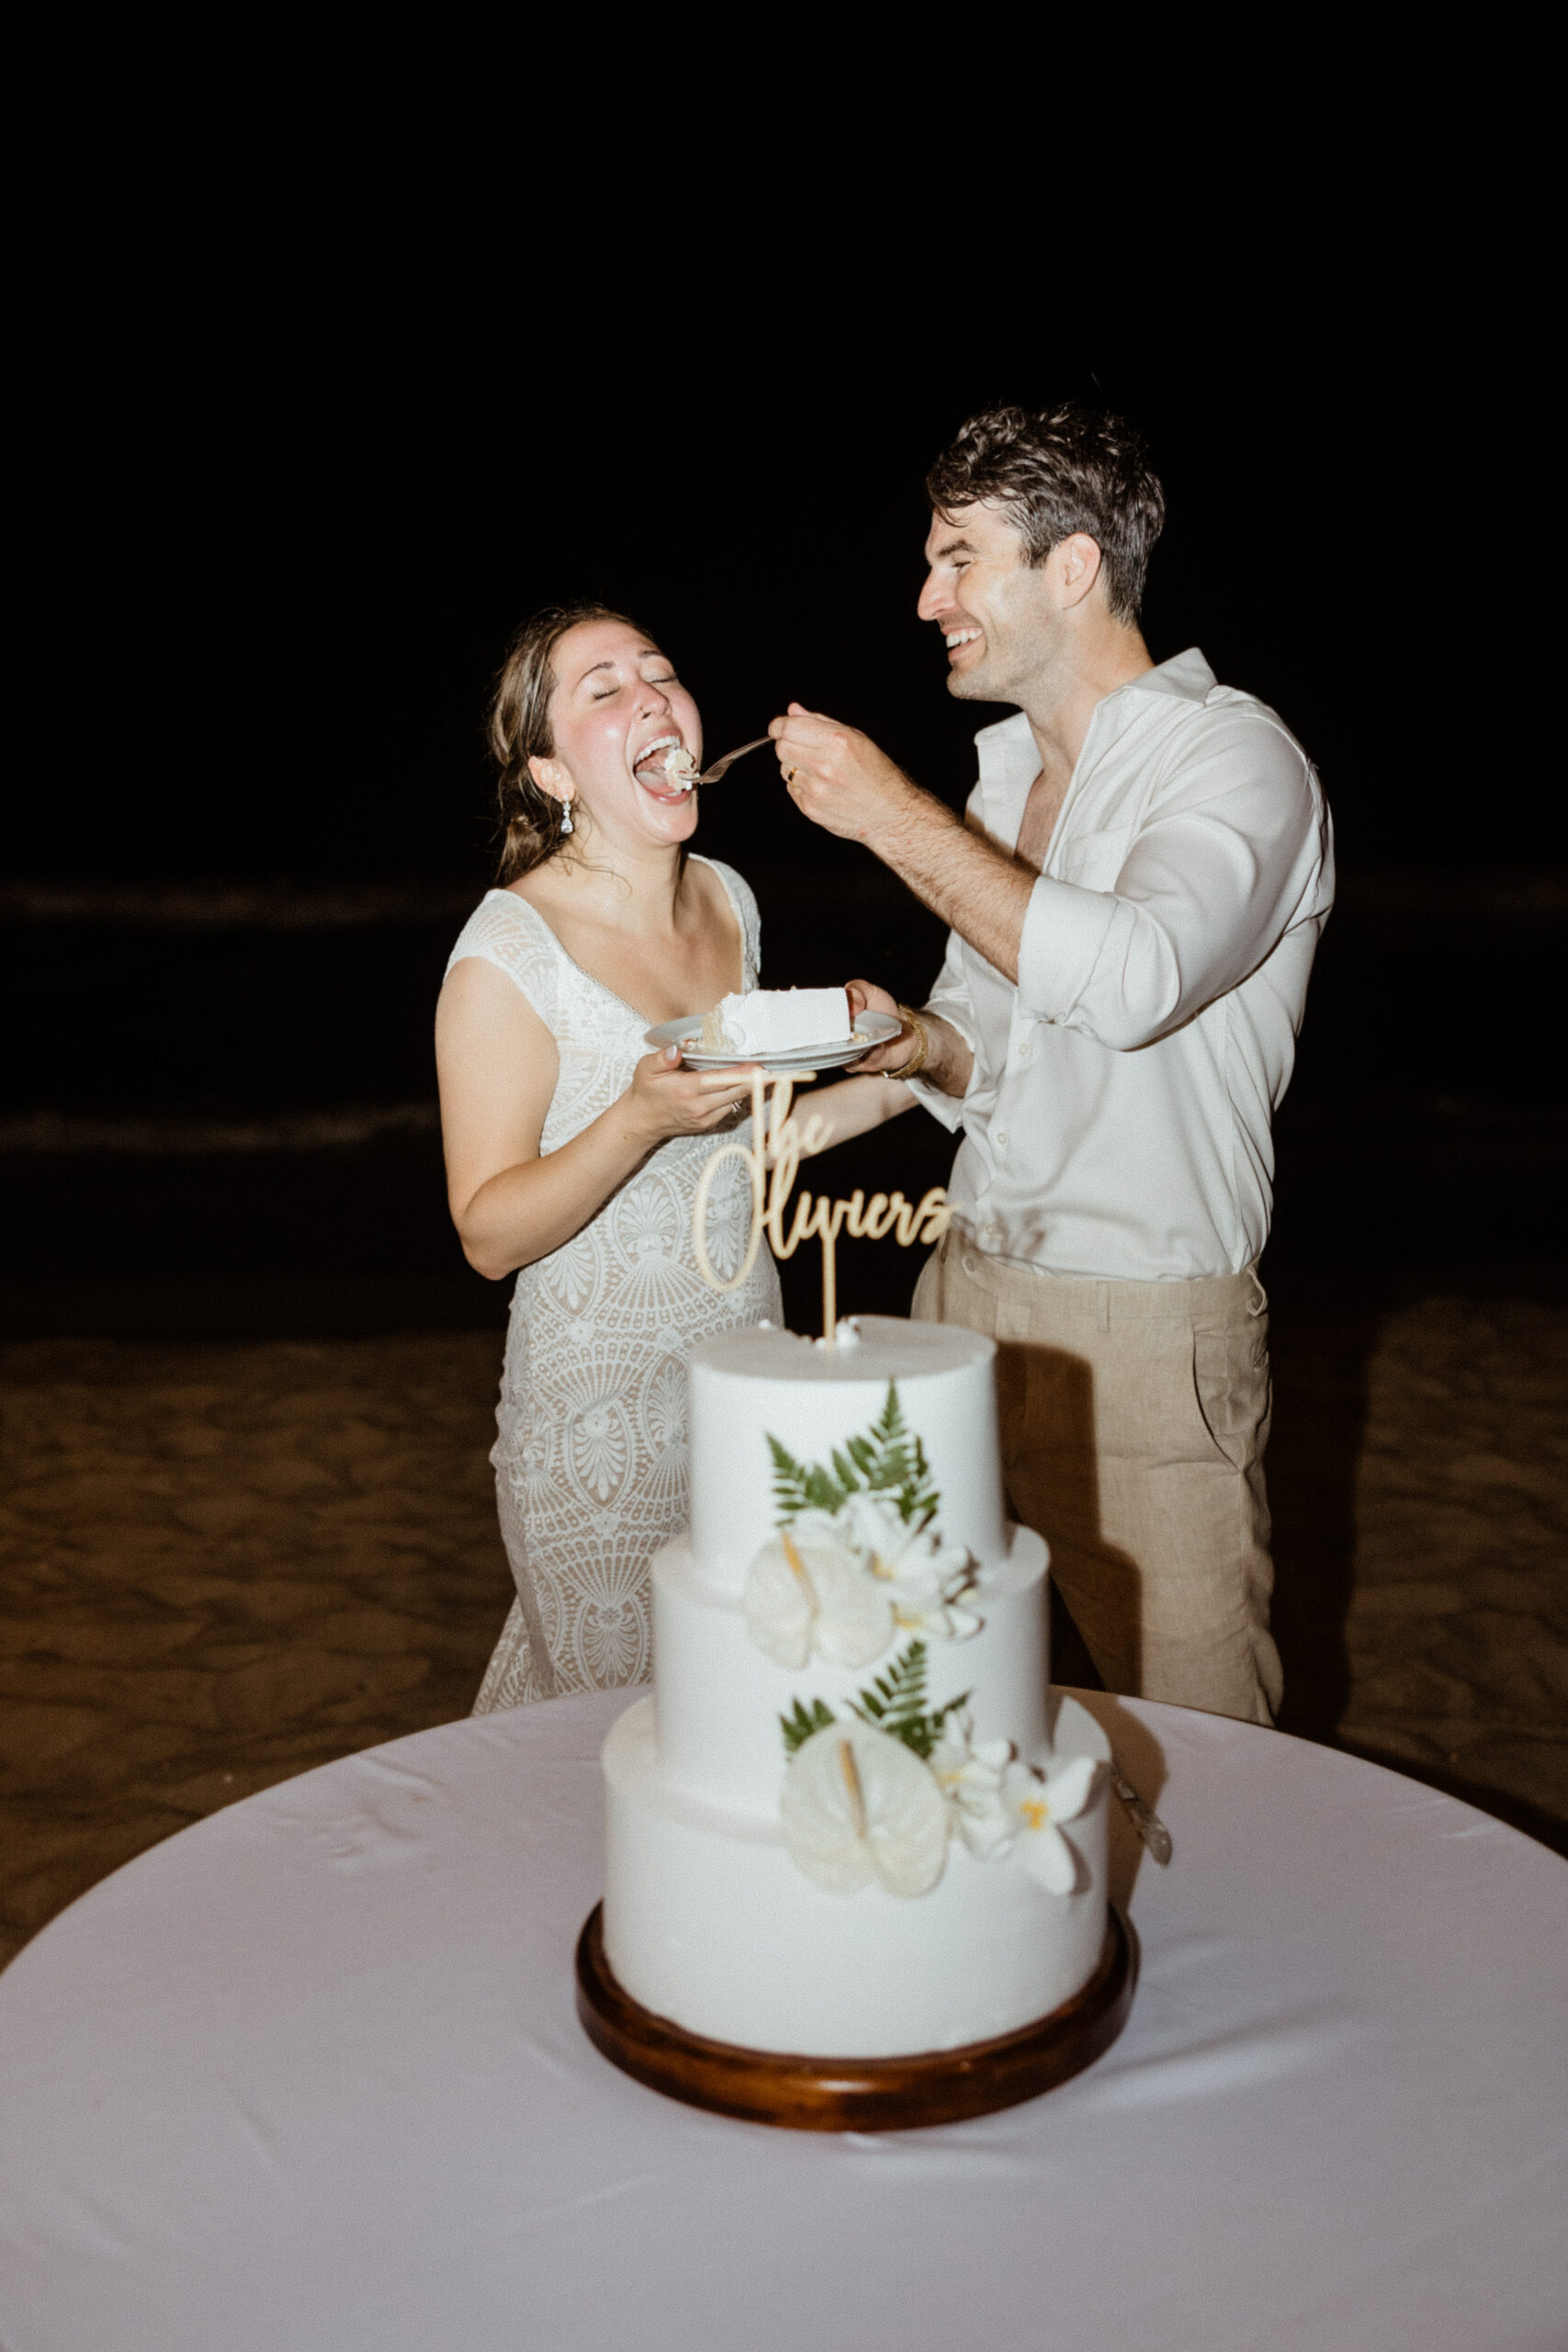 bride and groom eating wedding cake.